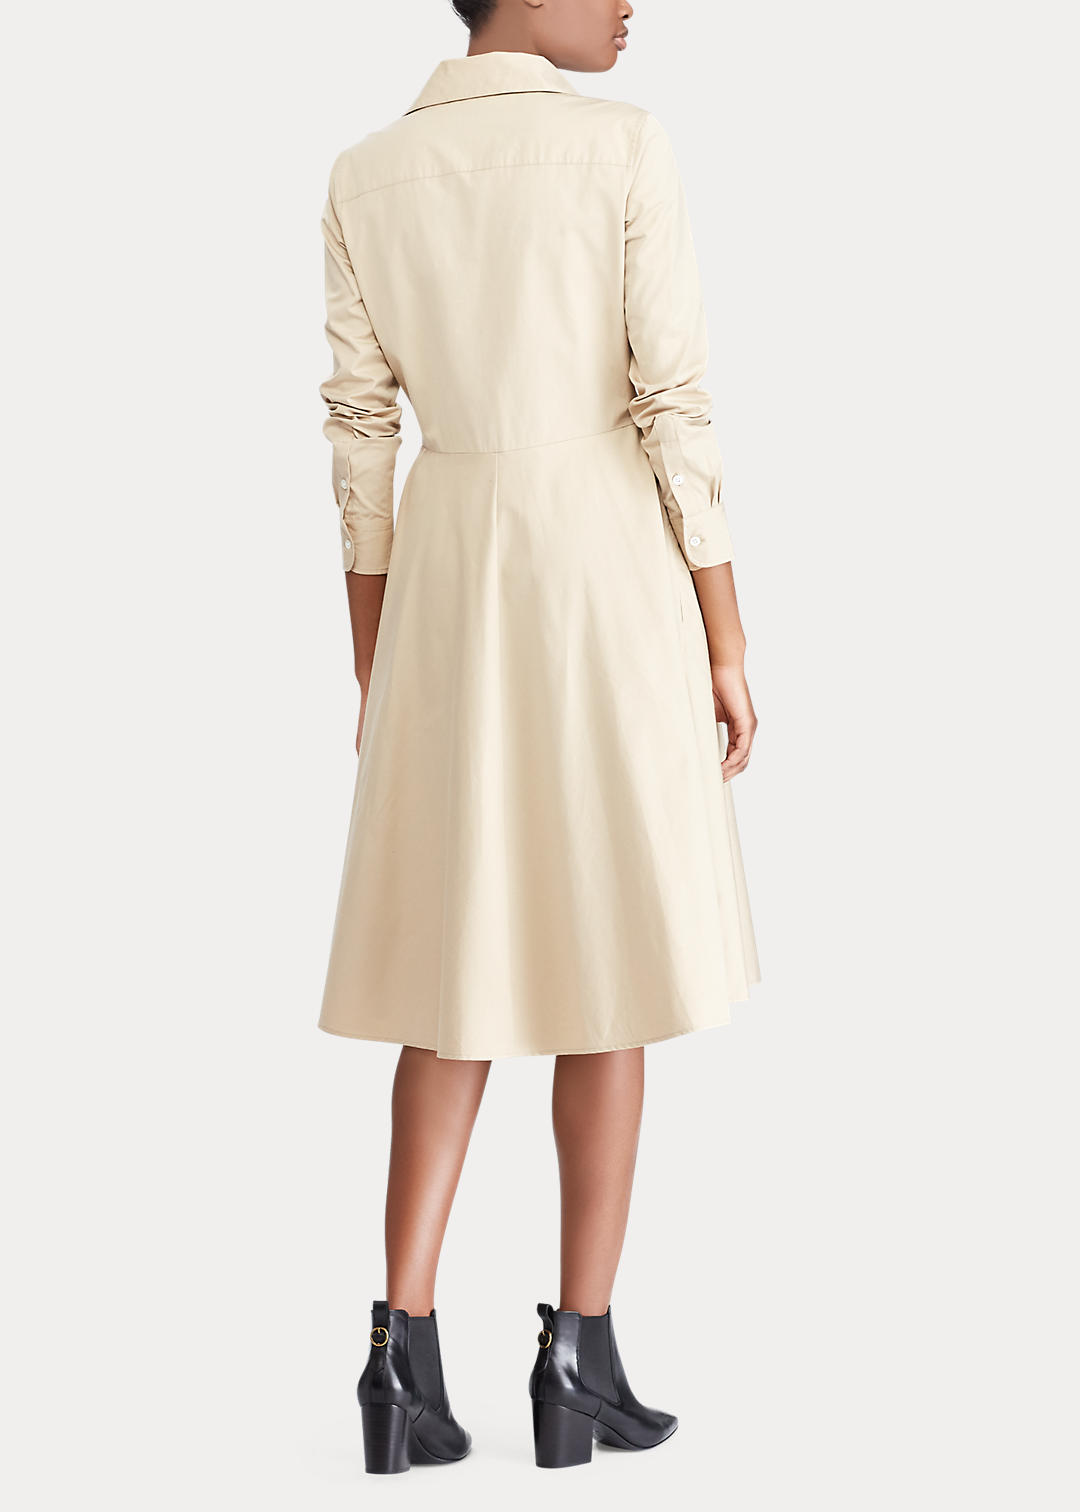 Polo Ralph Lauren Lace-Up Cotton Poplin Dress 3